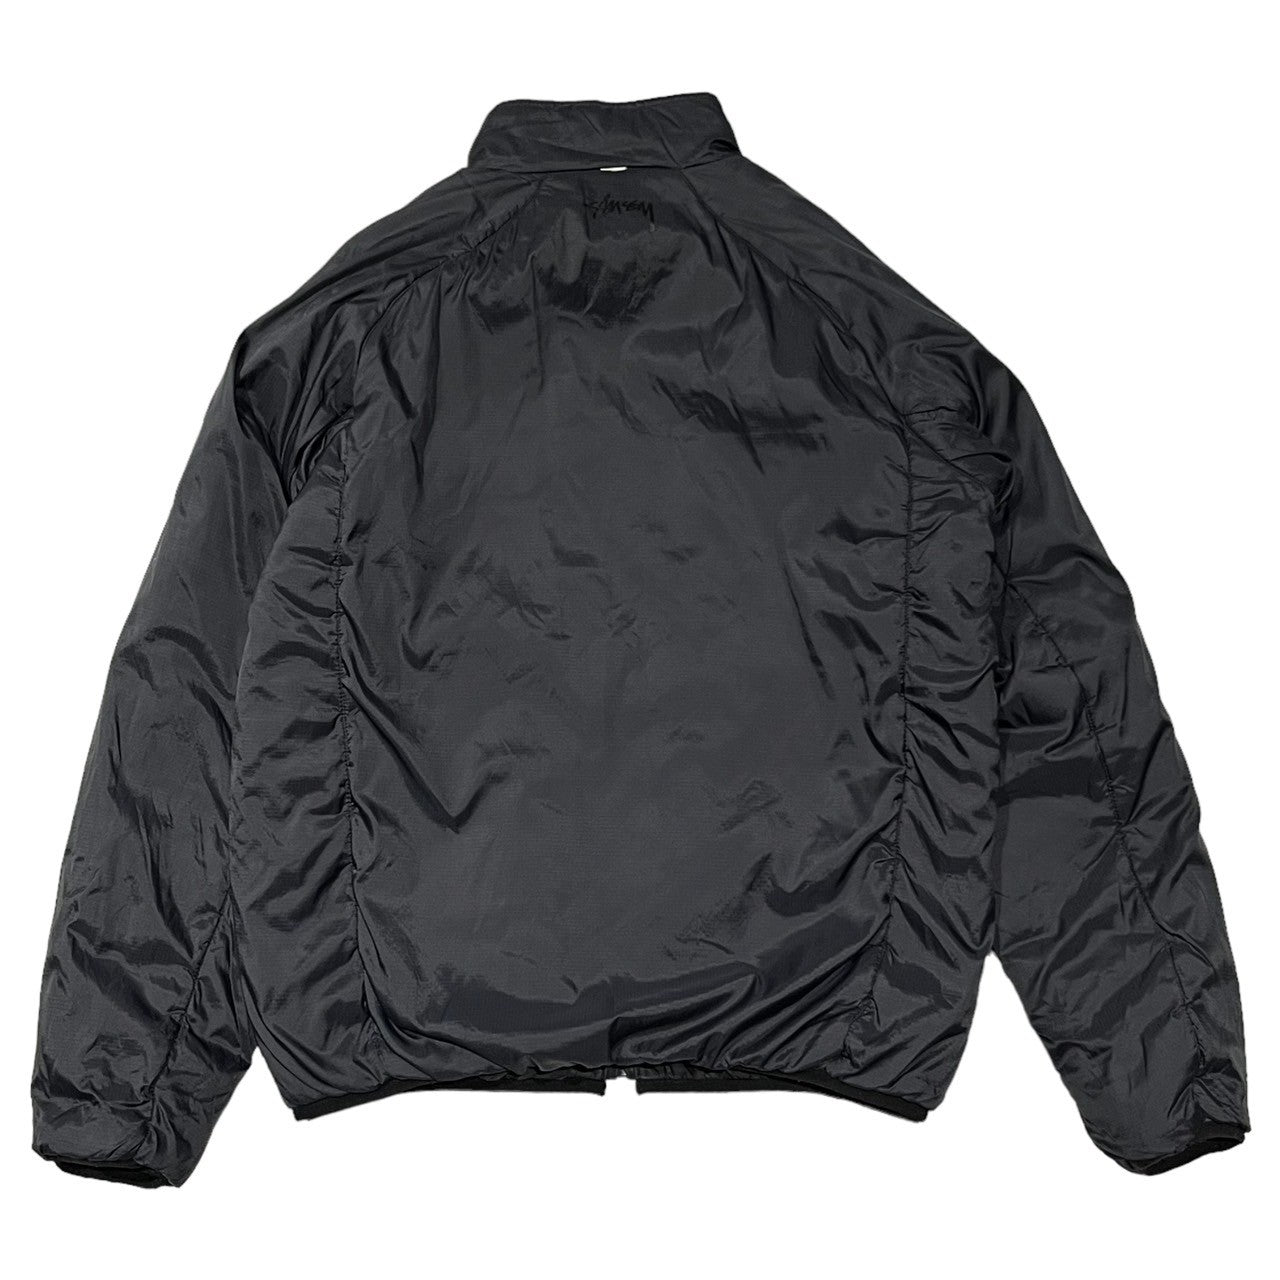 STUSSY(ステューシー) 00's "THERMOLITE"reversible logo jacket 筆記体 ロゴ  総柄 中綿 リバーシブル ジャケット  SIZE M ブラック×ブラック Y2K THERMOLITE 使用